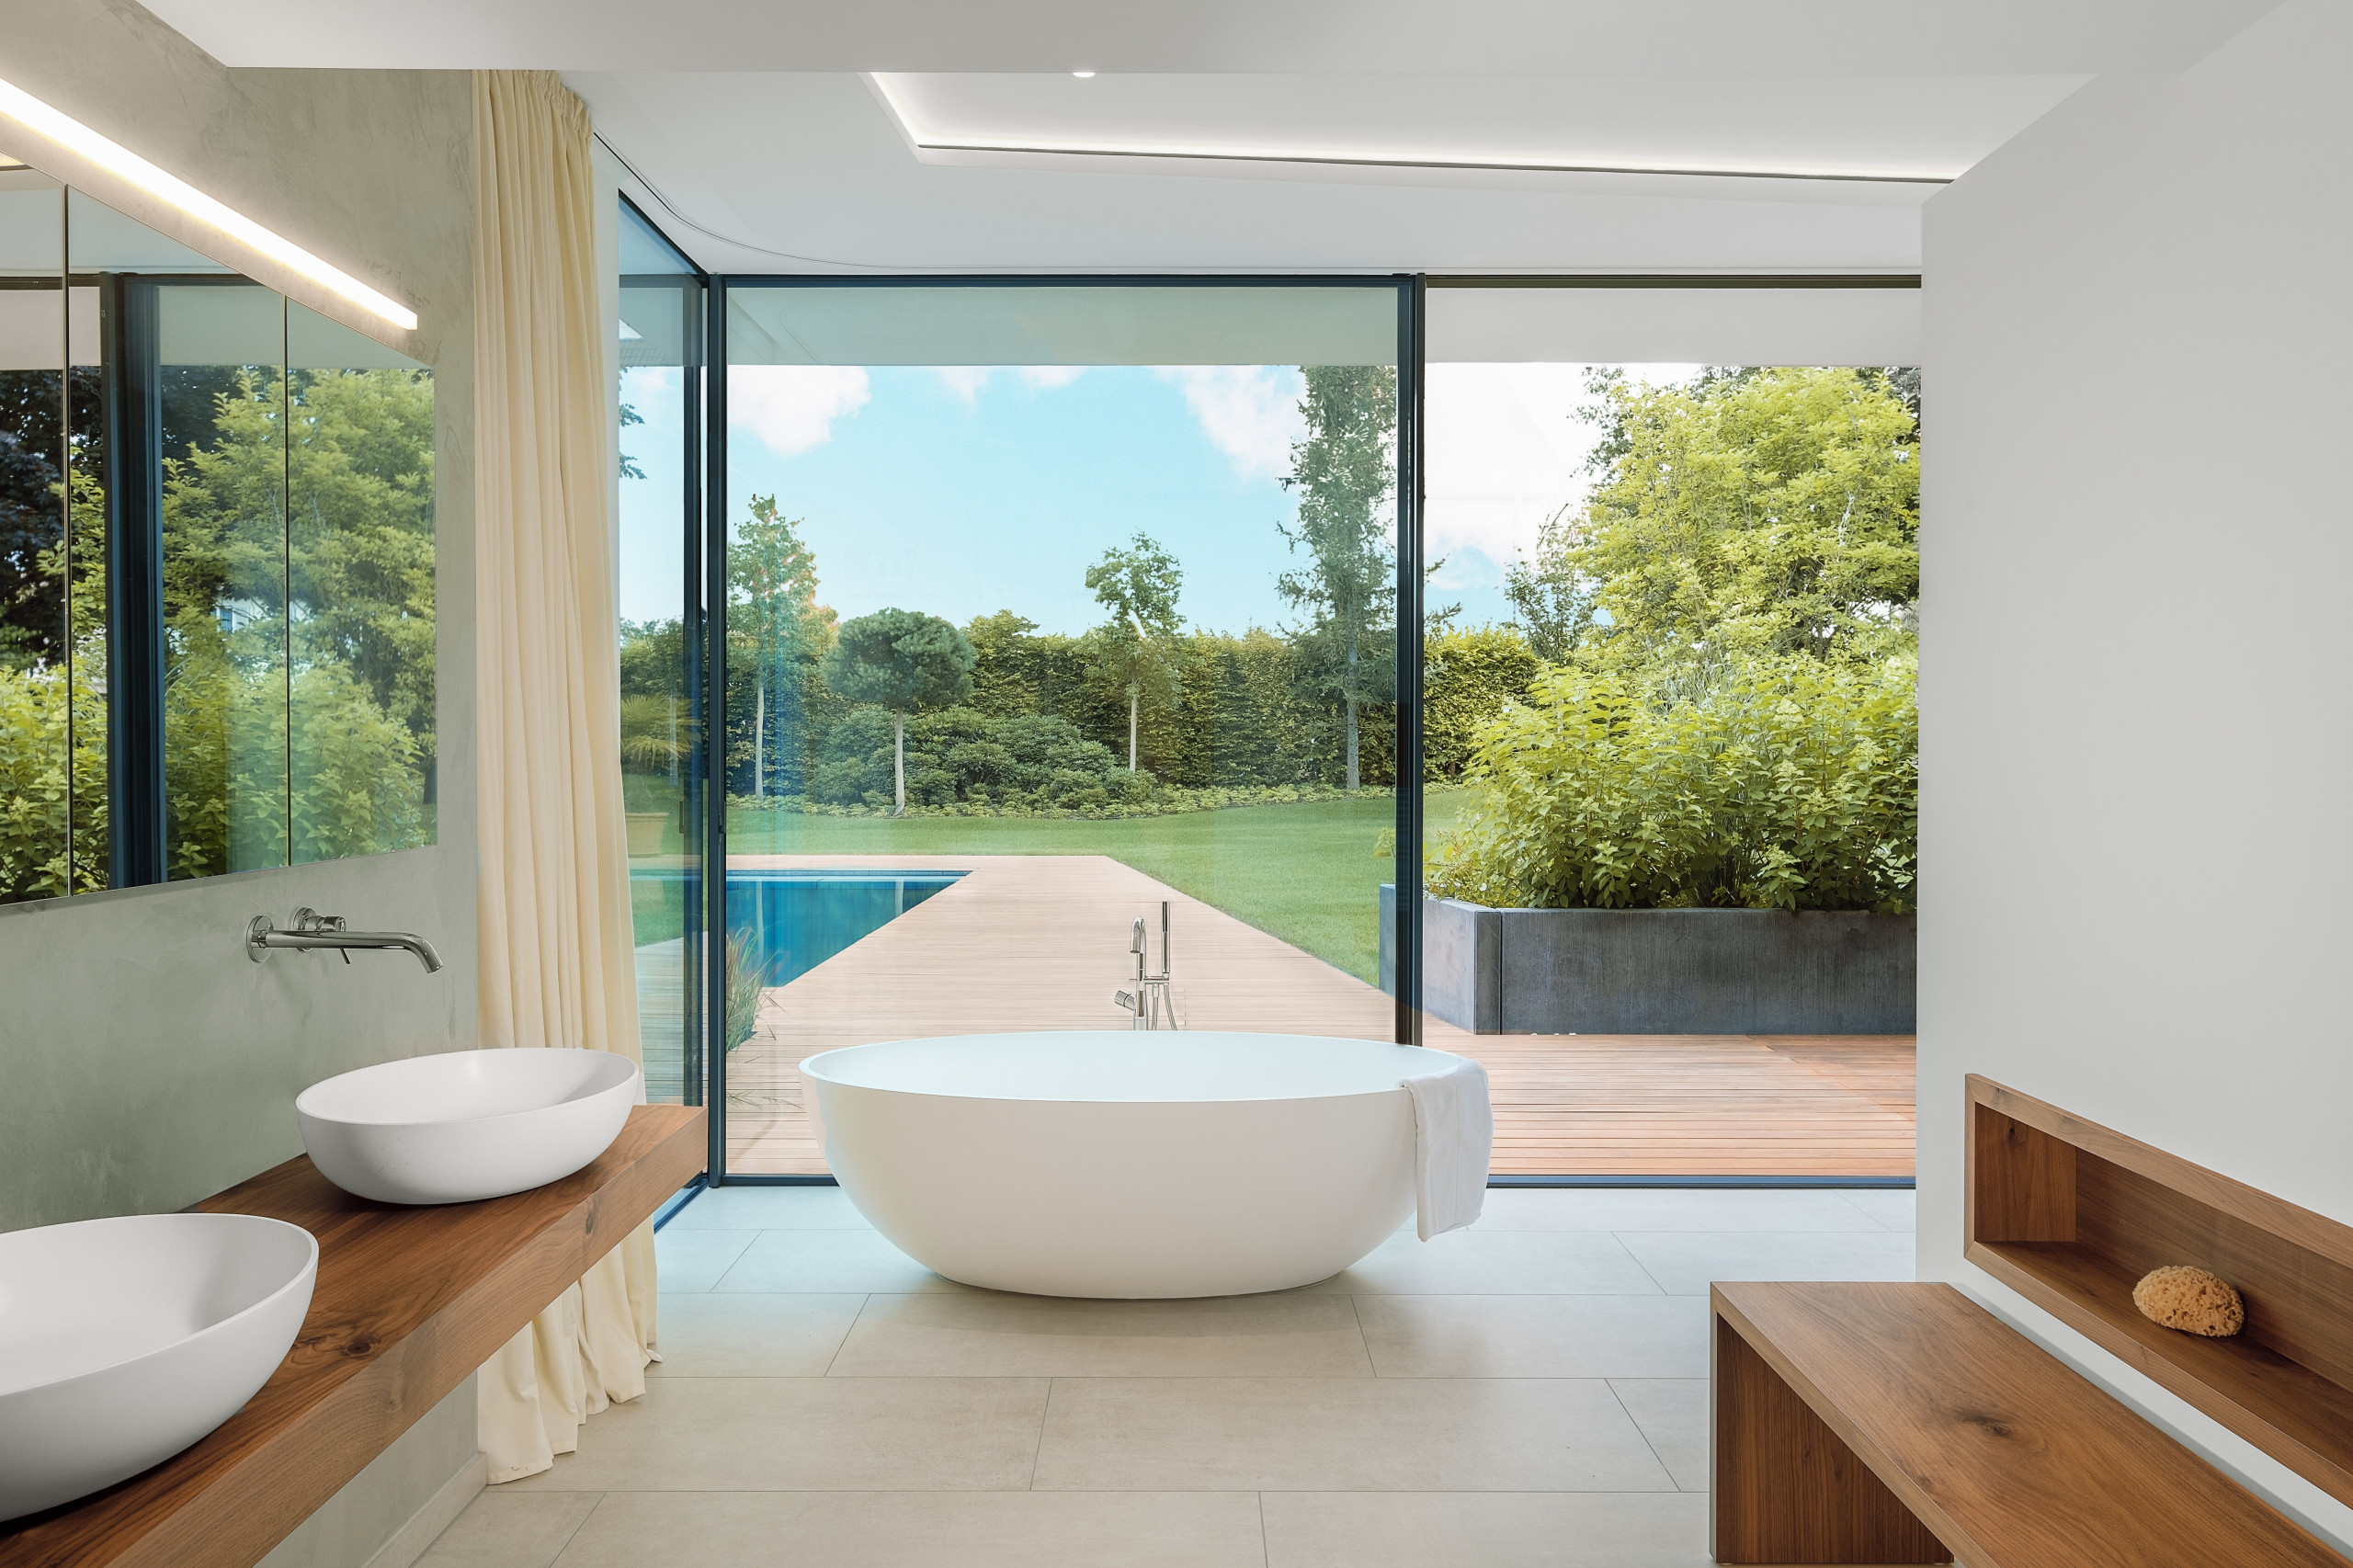 75 moderne badezimmer ideen & bilder | houzz